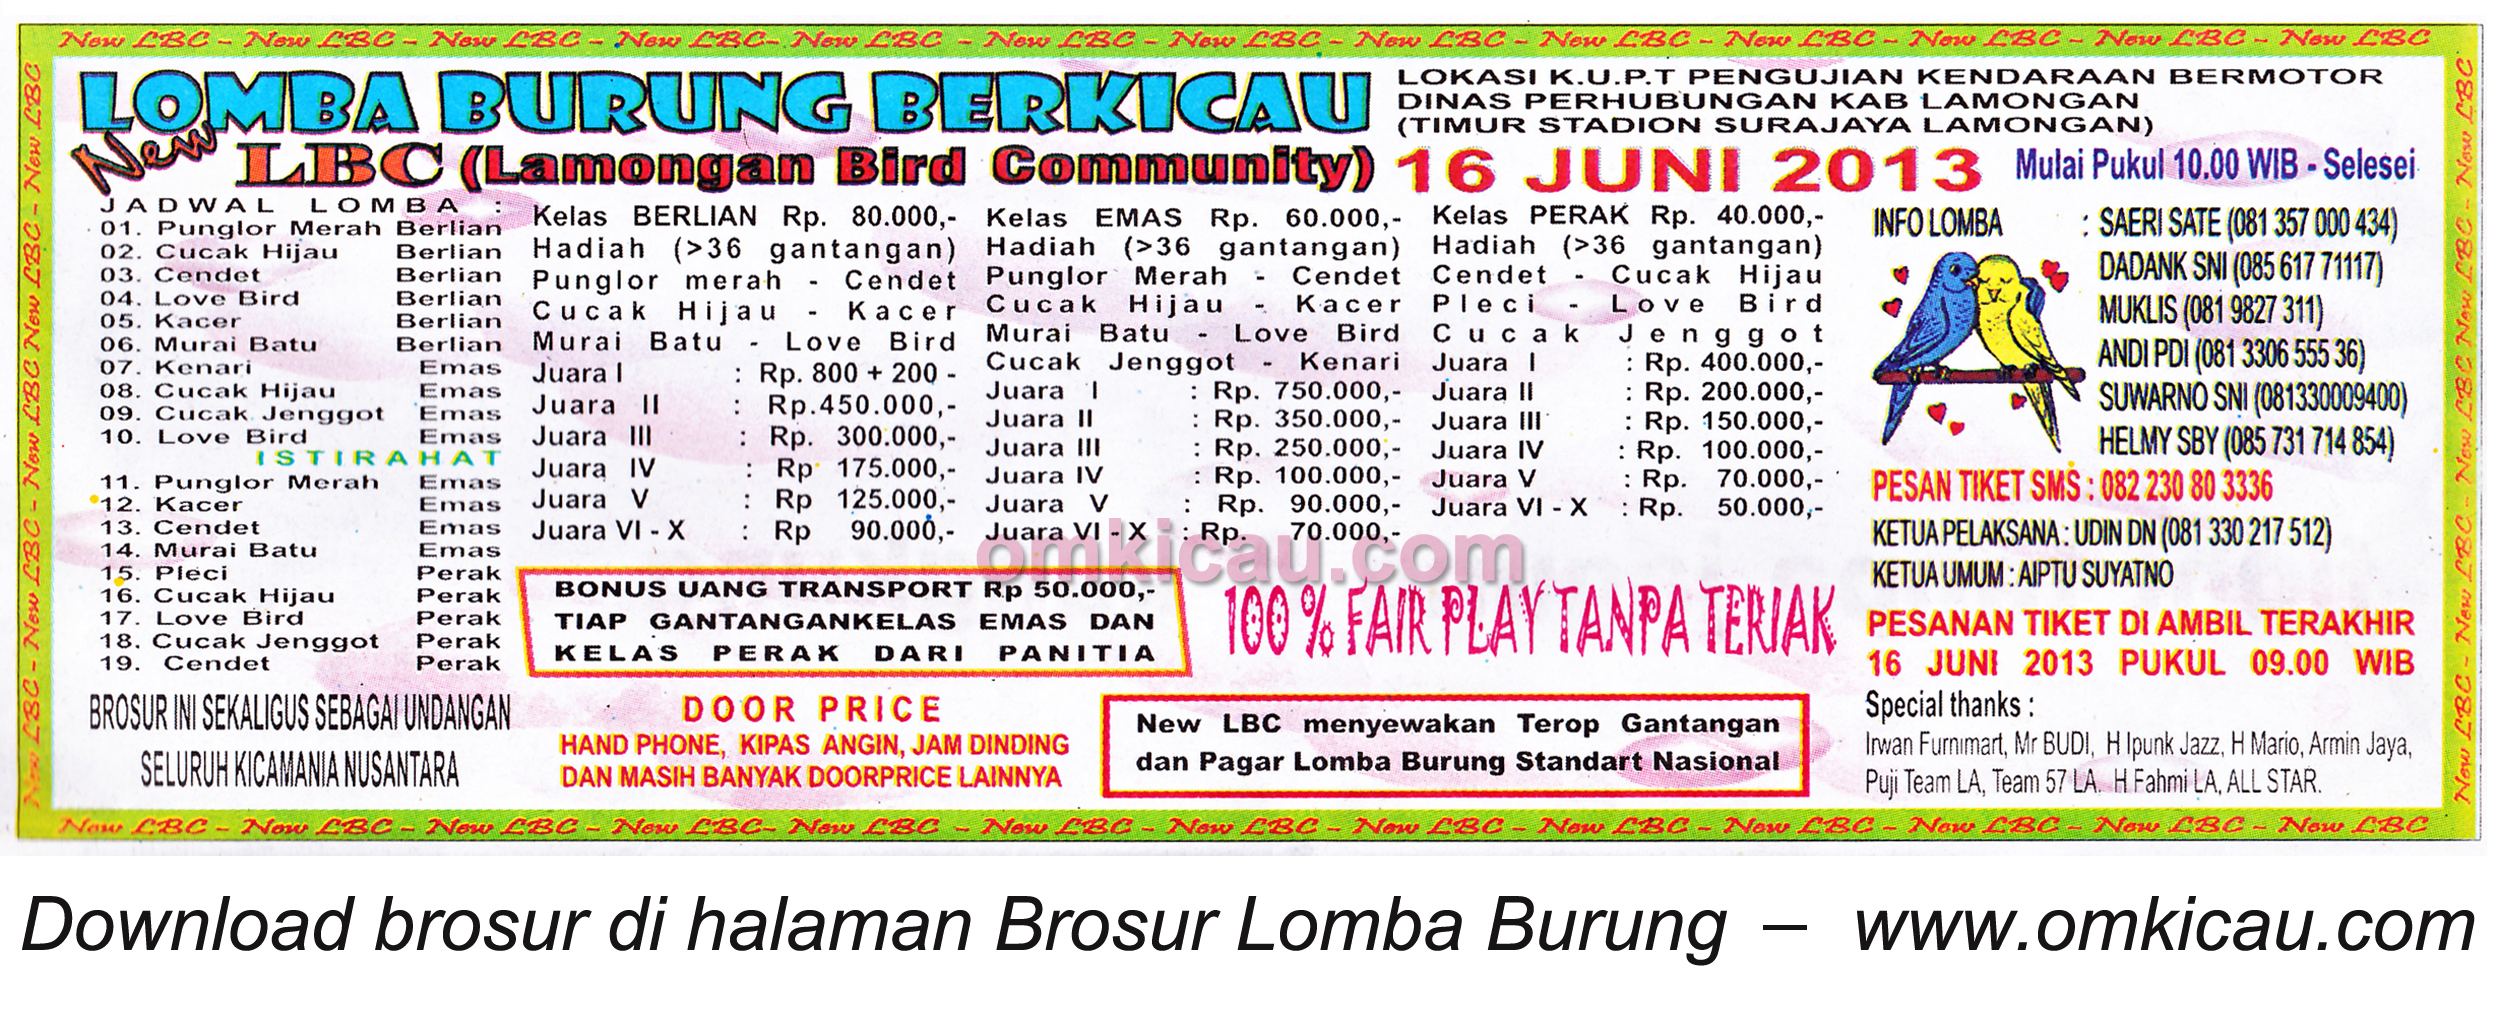 Brosur Lomba Burung New LBC Lamongan 16 Juni 2013